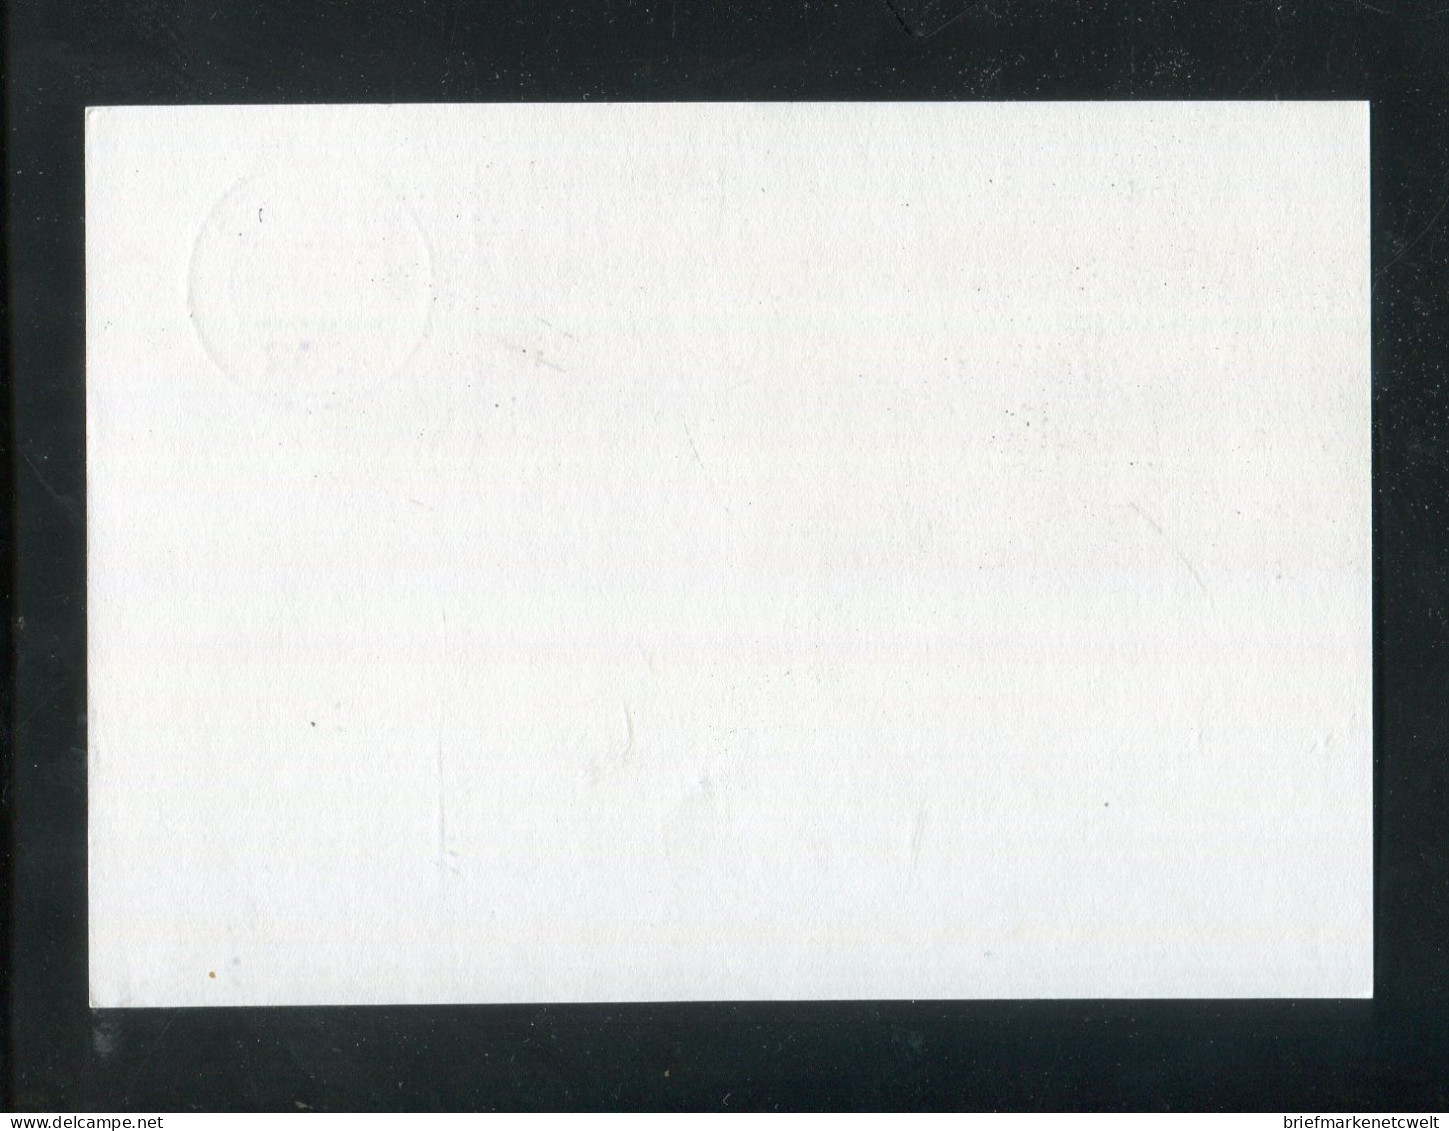 "BUNDESREPUBLIK DEUTSCHLAND" 1980, Bildpostkarte Mit Bildgleichem Stempel Ex "ALSFELD" (B0063) - Cartes Postales Illustrées - Oblitérées